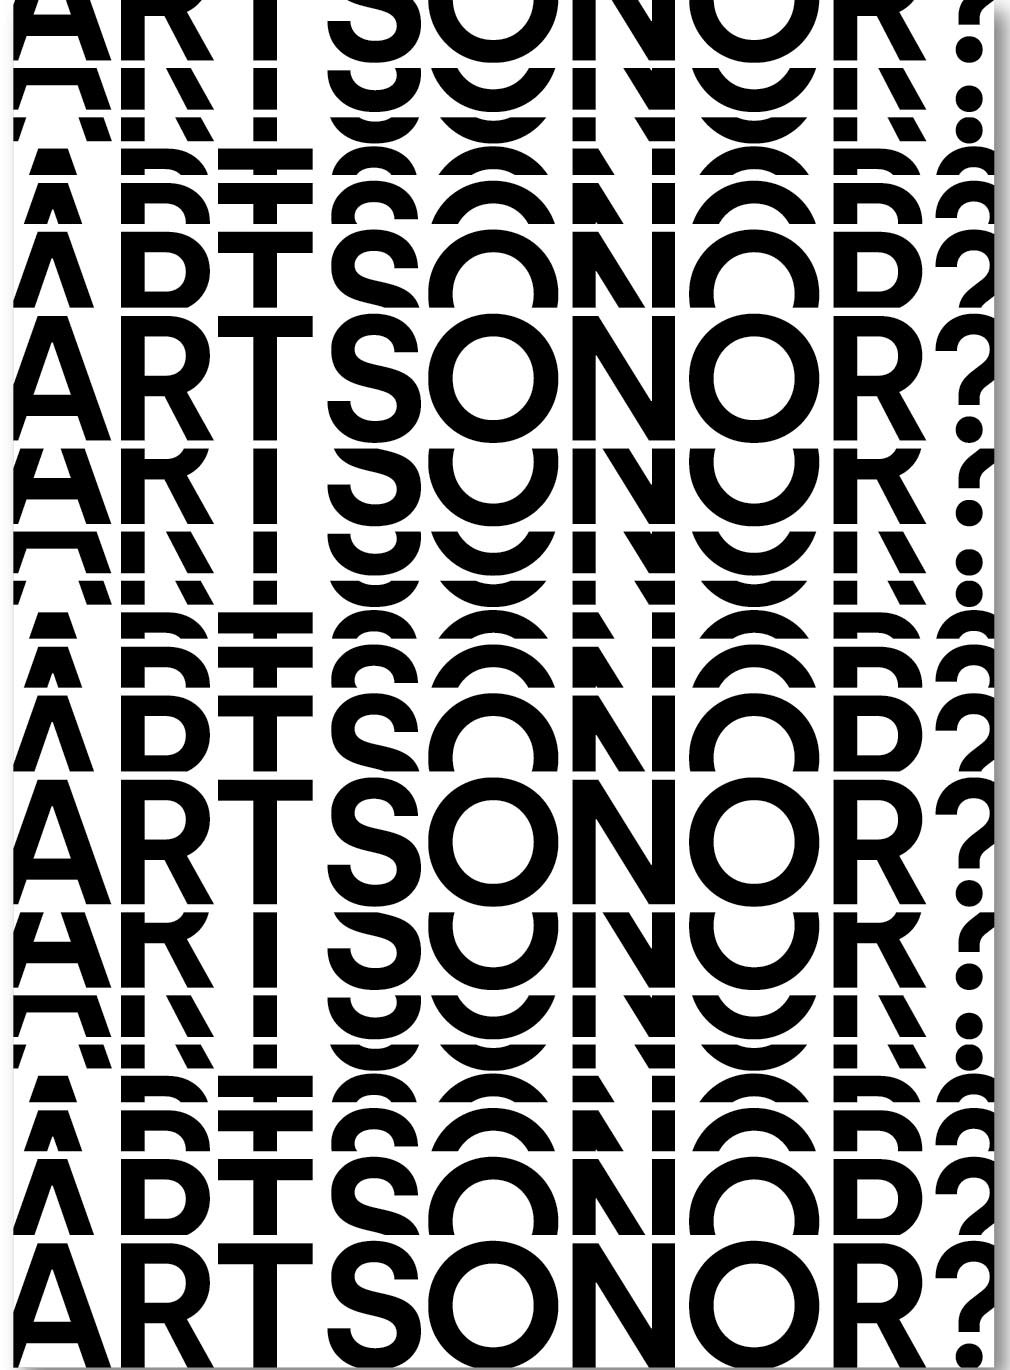 Art Sonor? (catalán)